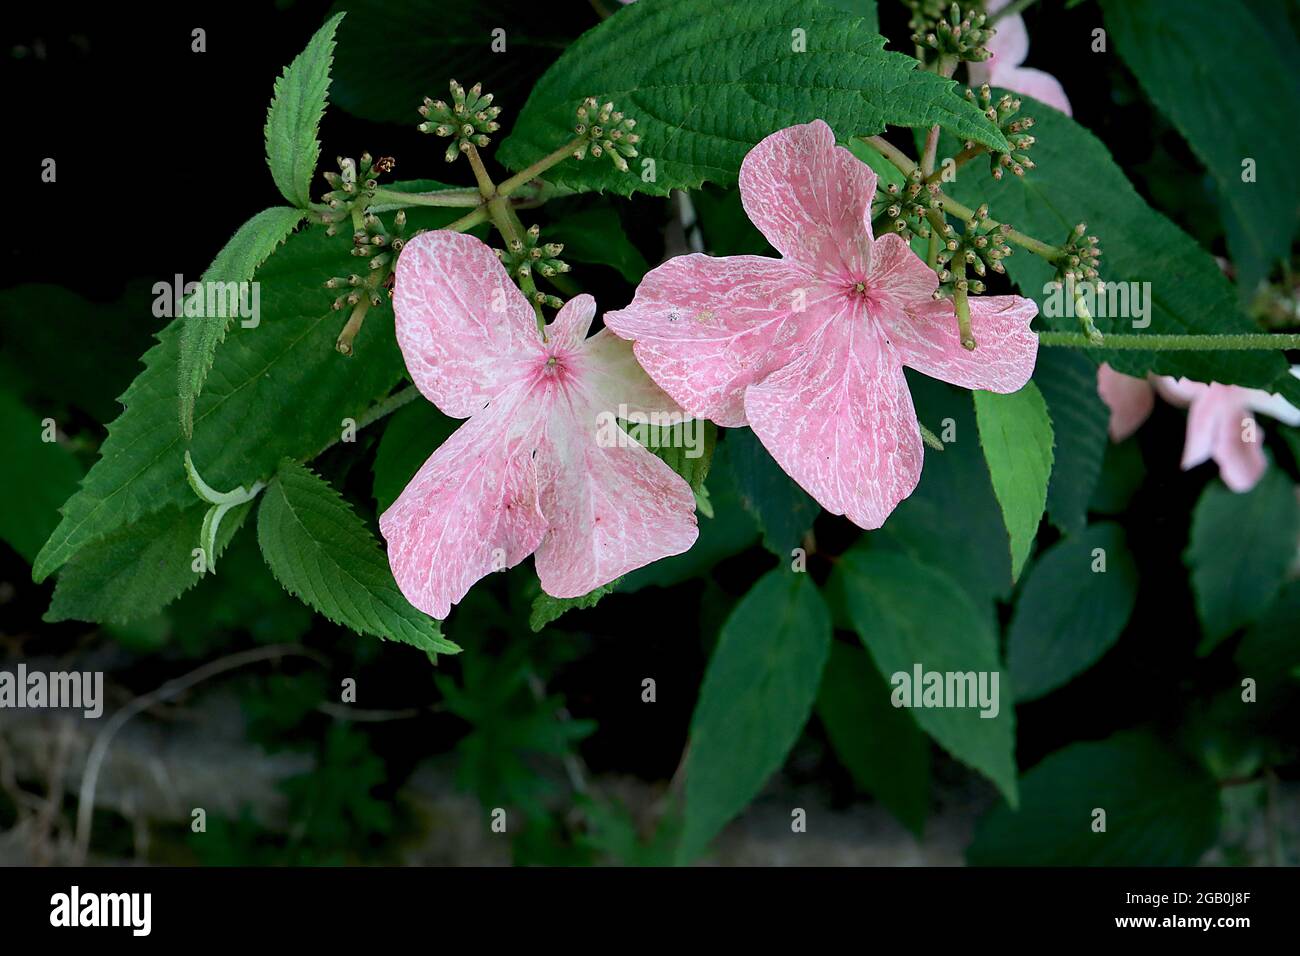 Hydrangea paniculata ‘Pinky Winky’ Hortensia Pinky Winky – pink flowers with white veins and irregular petal shapes,  June, England, UK Stock Photo